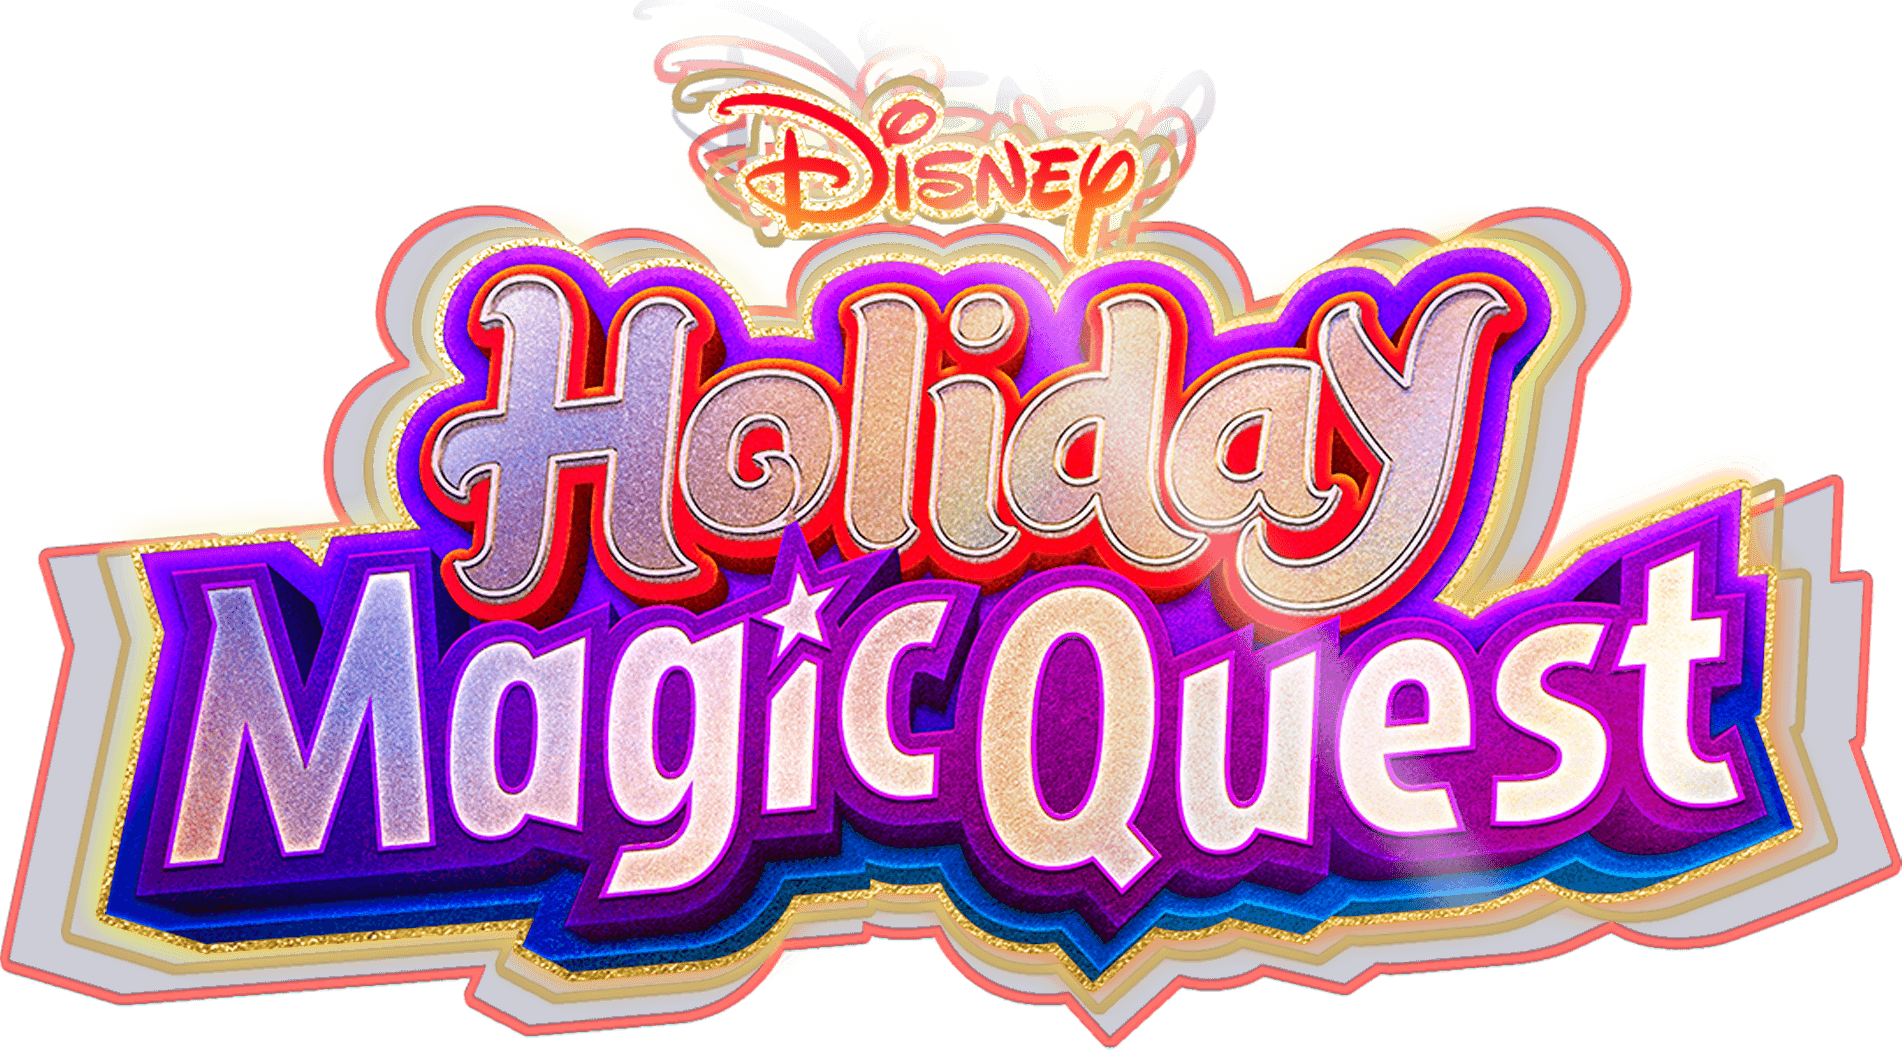 Disney's Holiday Magic Quest logo